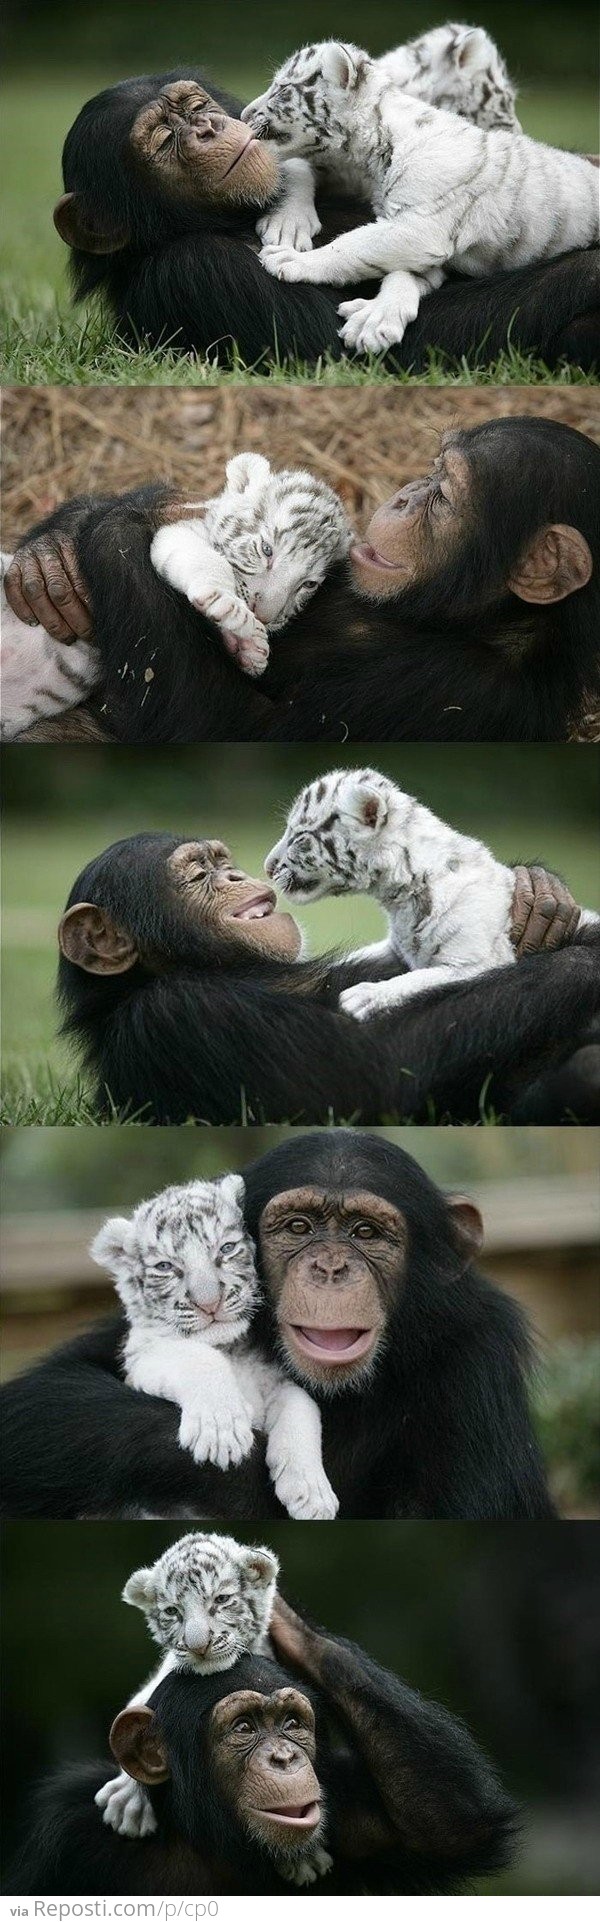 Chimp & Tiger